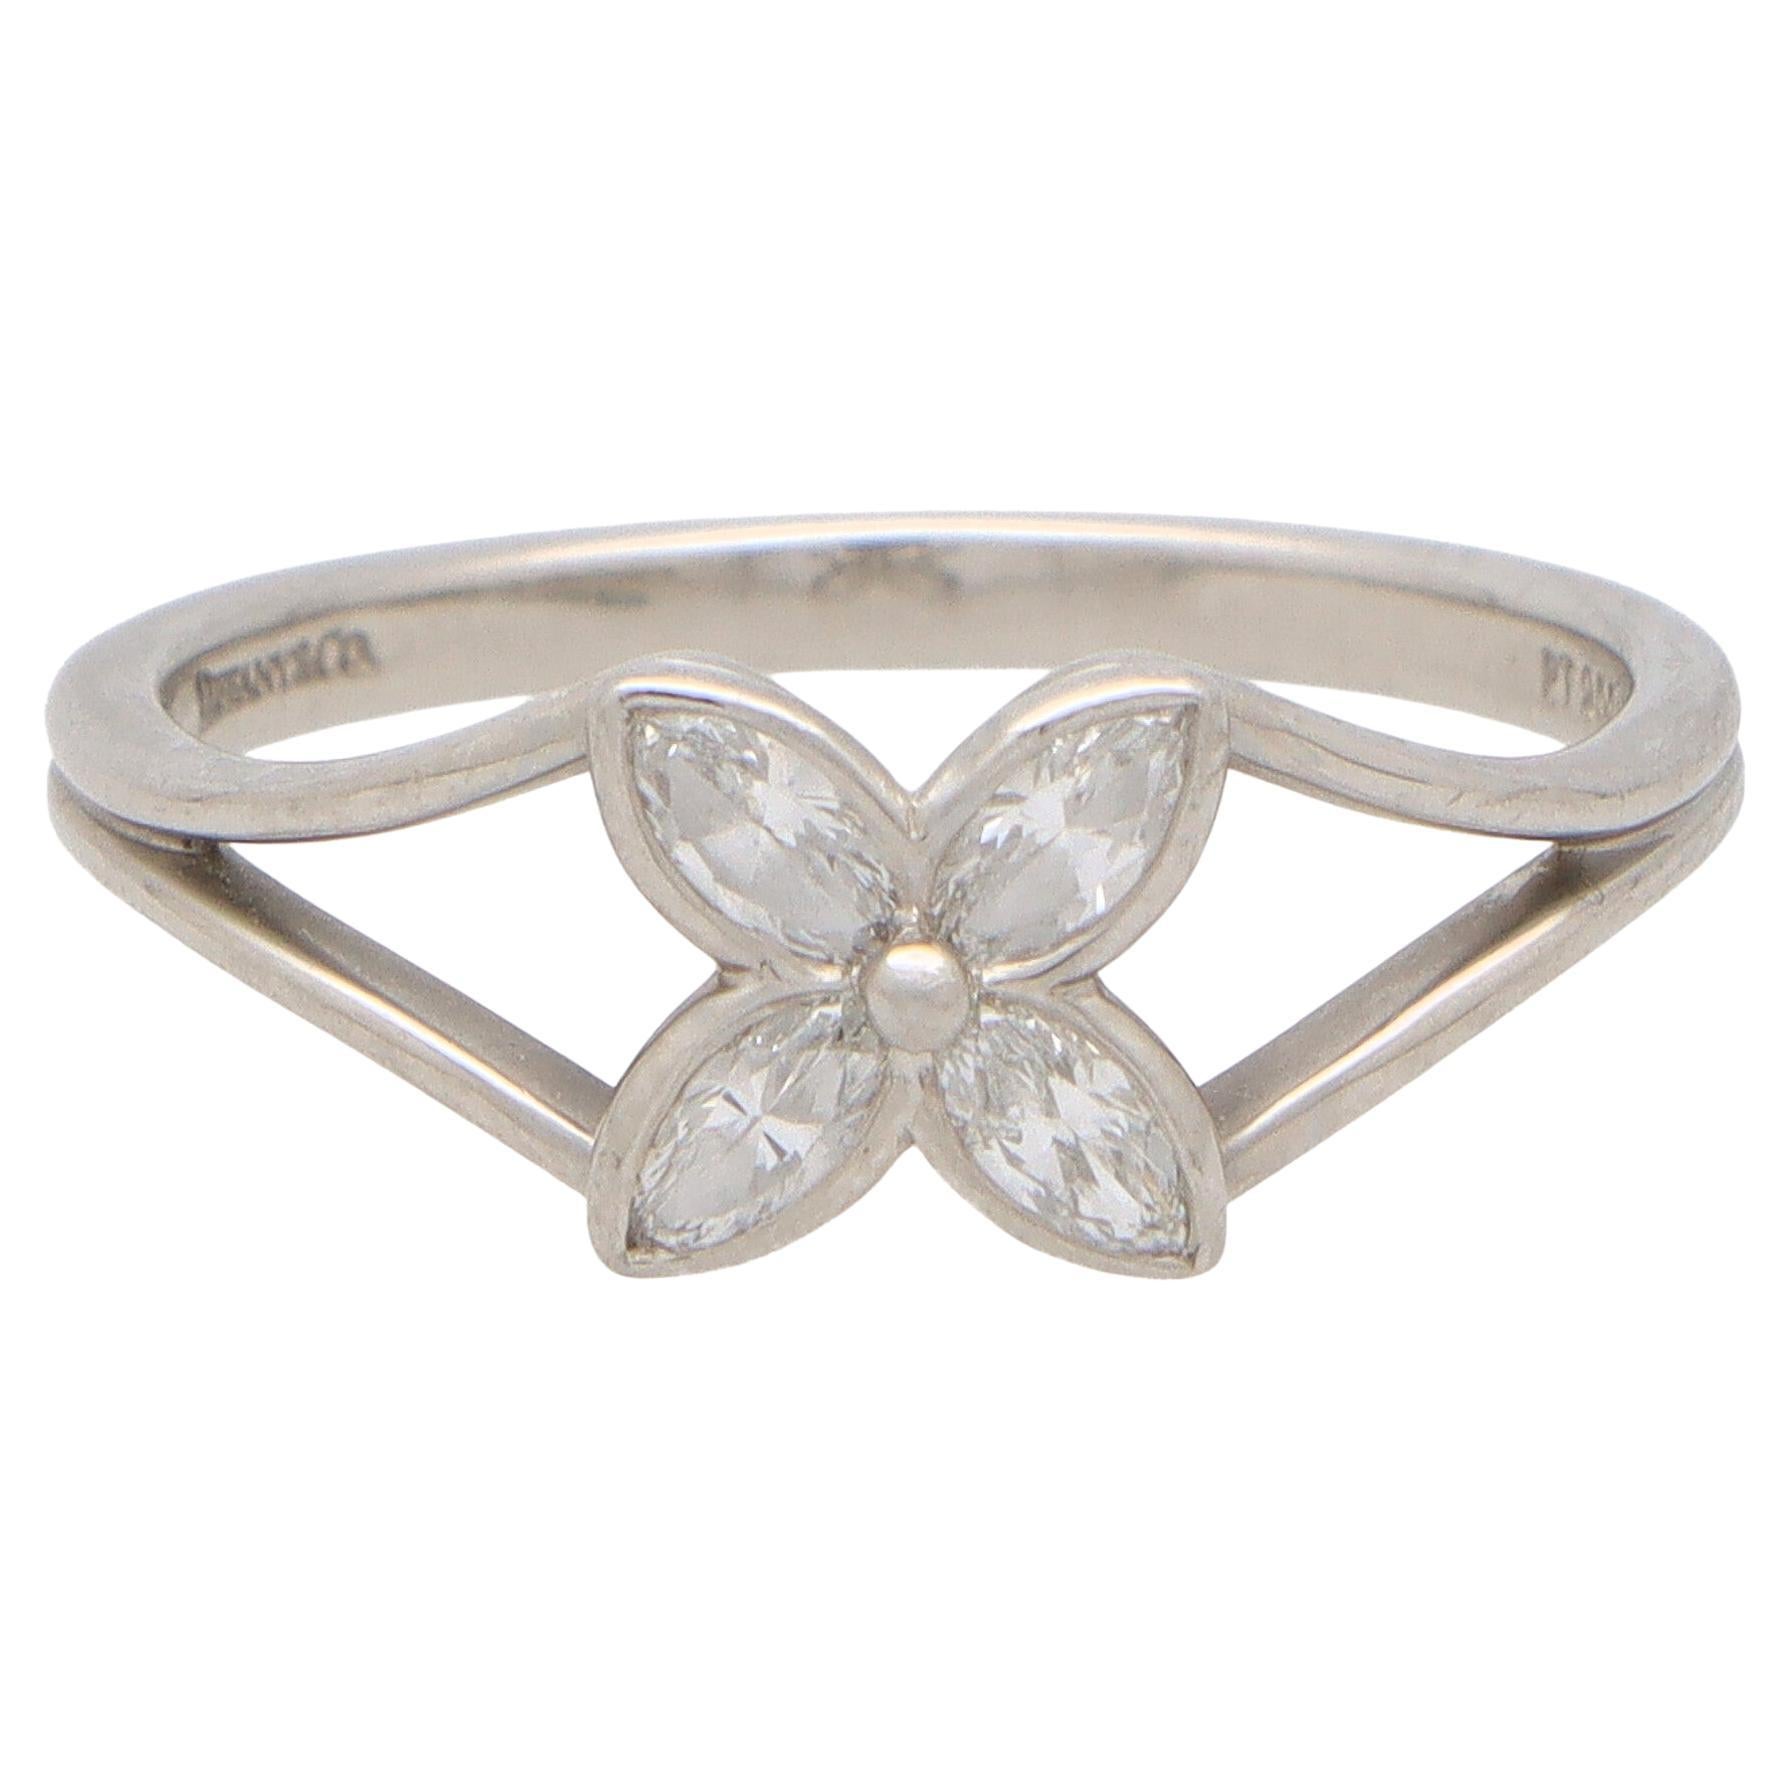 Vintage Tiffany & Co. Victoria Diamond Ring Set in Platinum